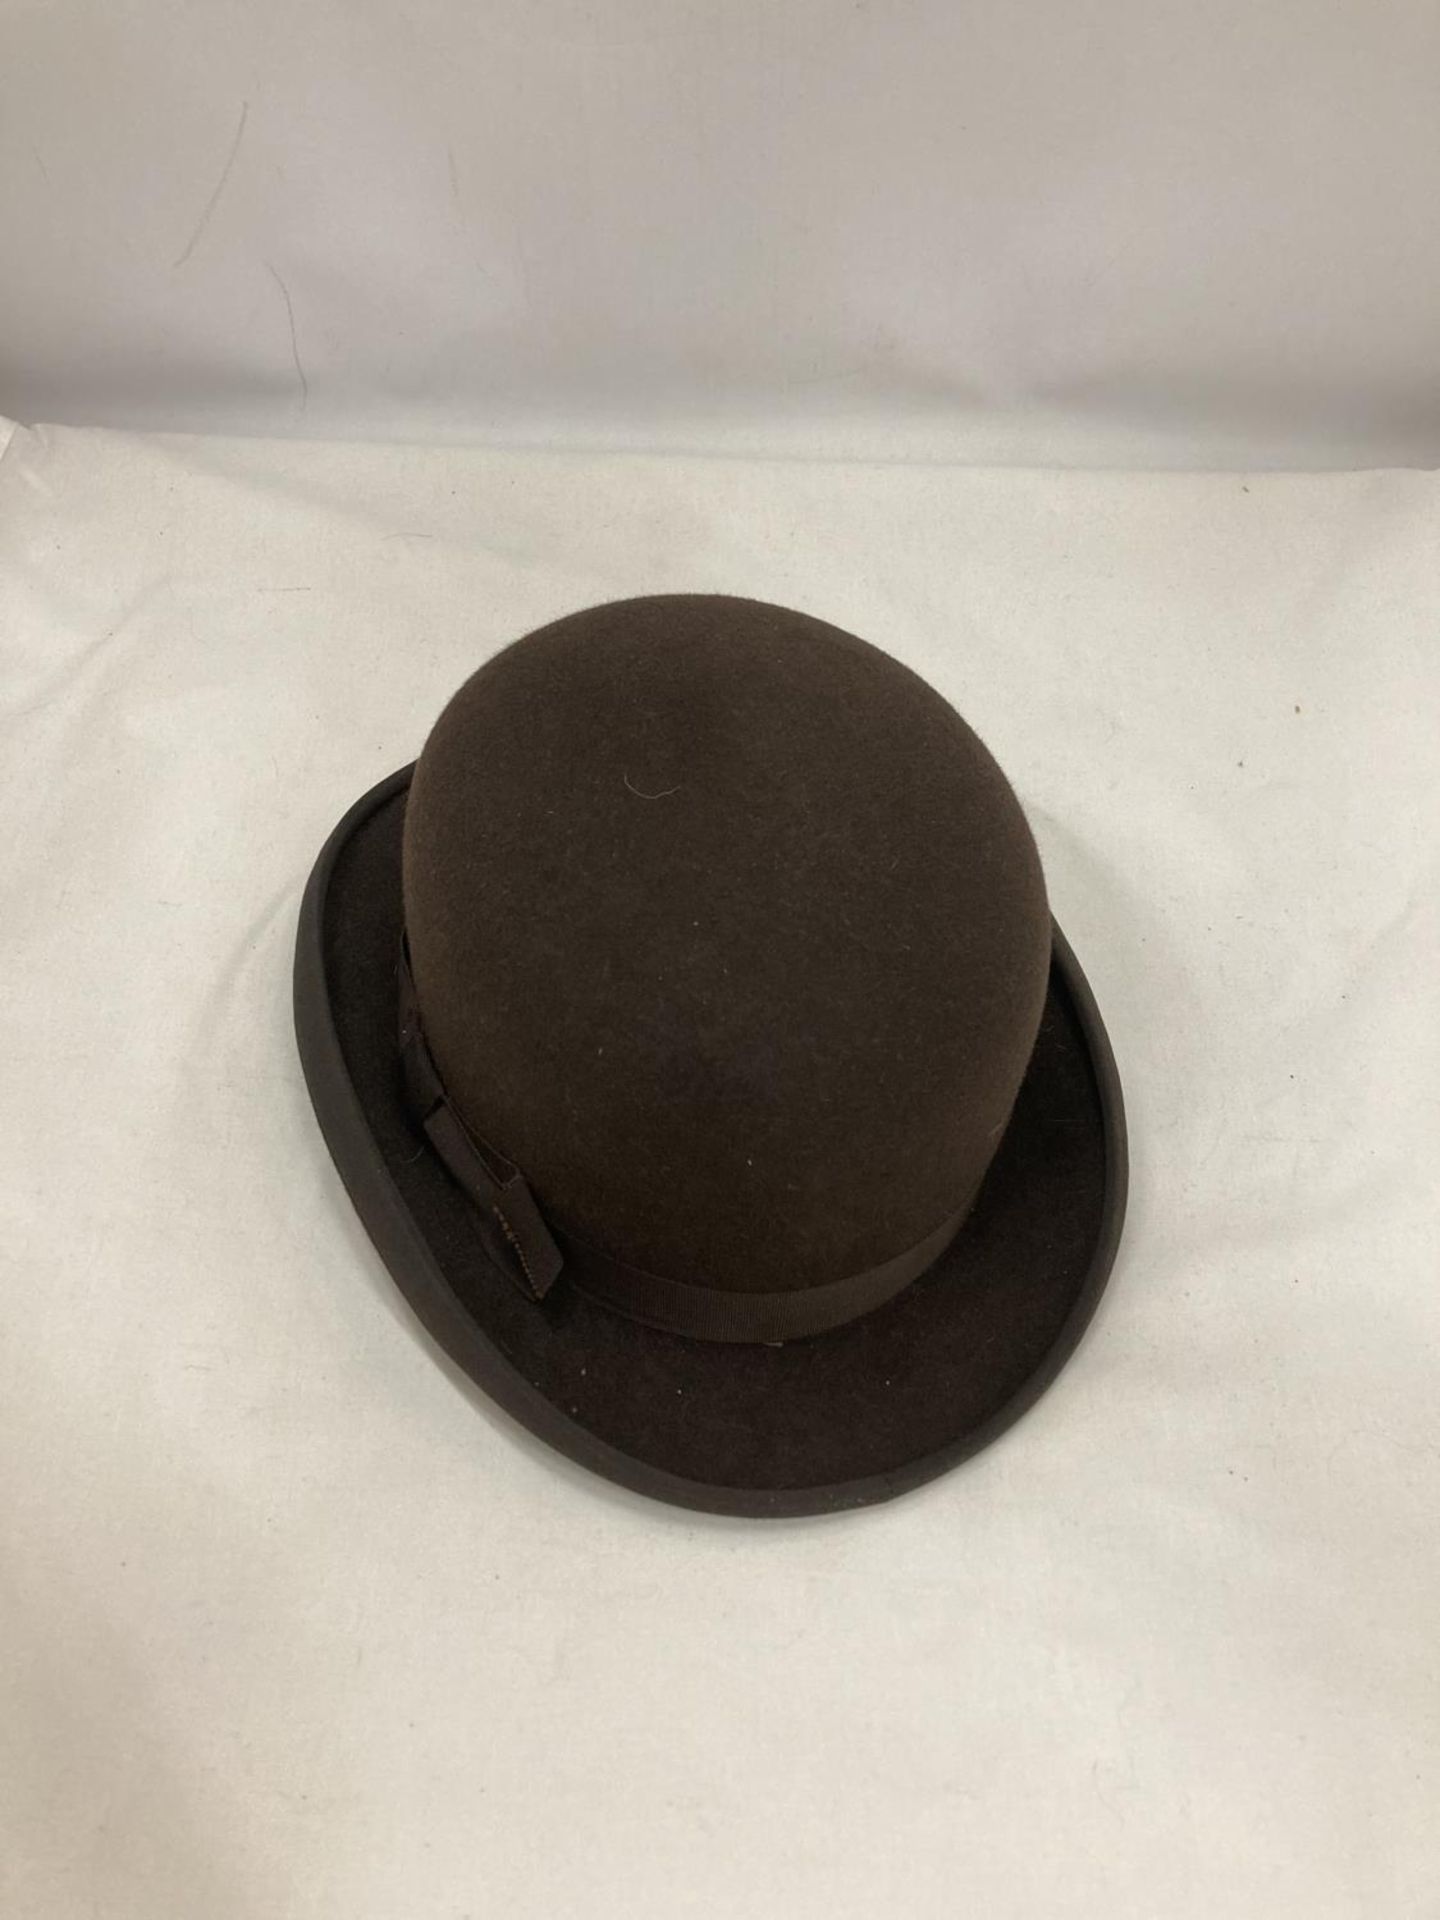 A CHRISTY'S LONDON BOWLER HAT, SIZE 6 7/8, A G A DUNN & CO LTD TRILBY HAT PLUS A VINTAGE LADIES HAT - Image 3 of 9